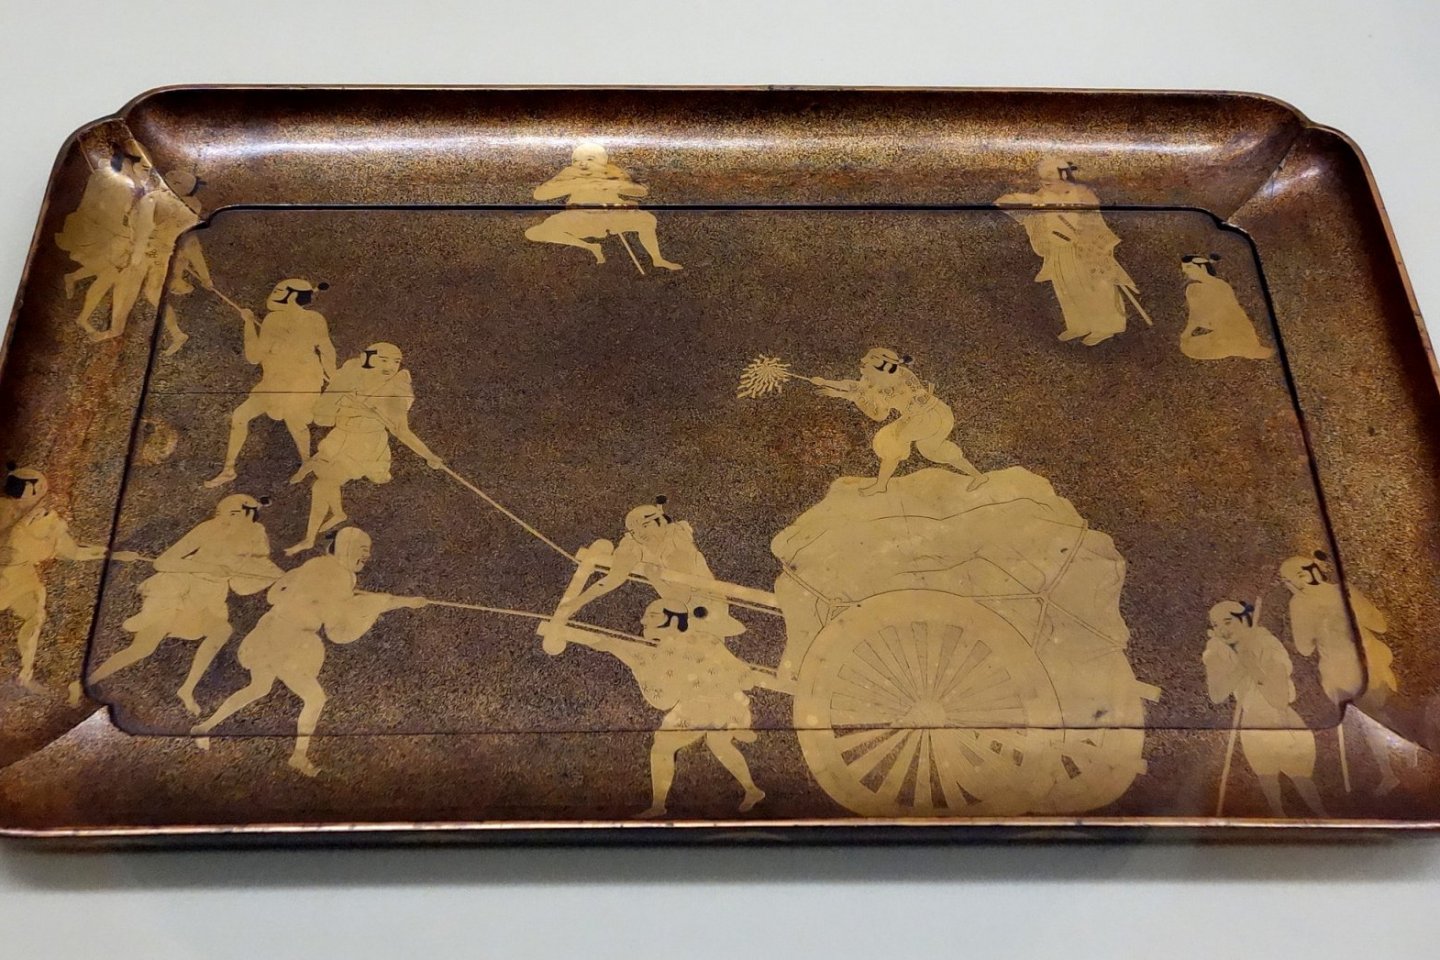 An example of an Edo Period maki-e tray